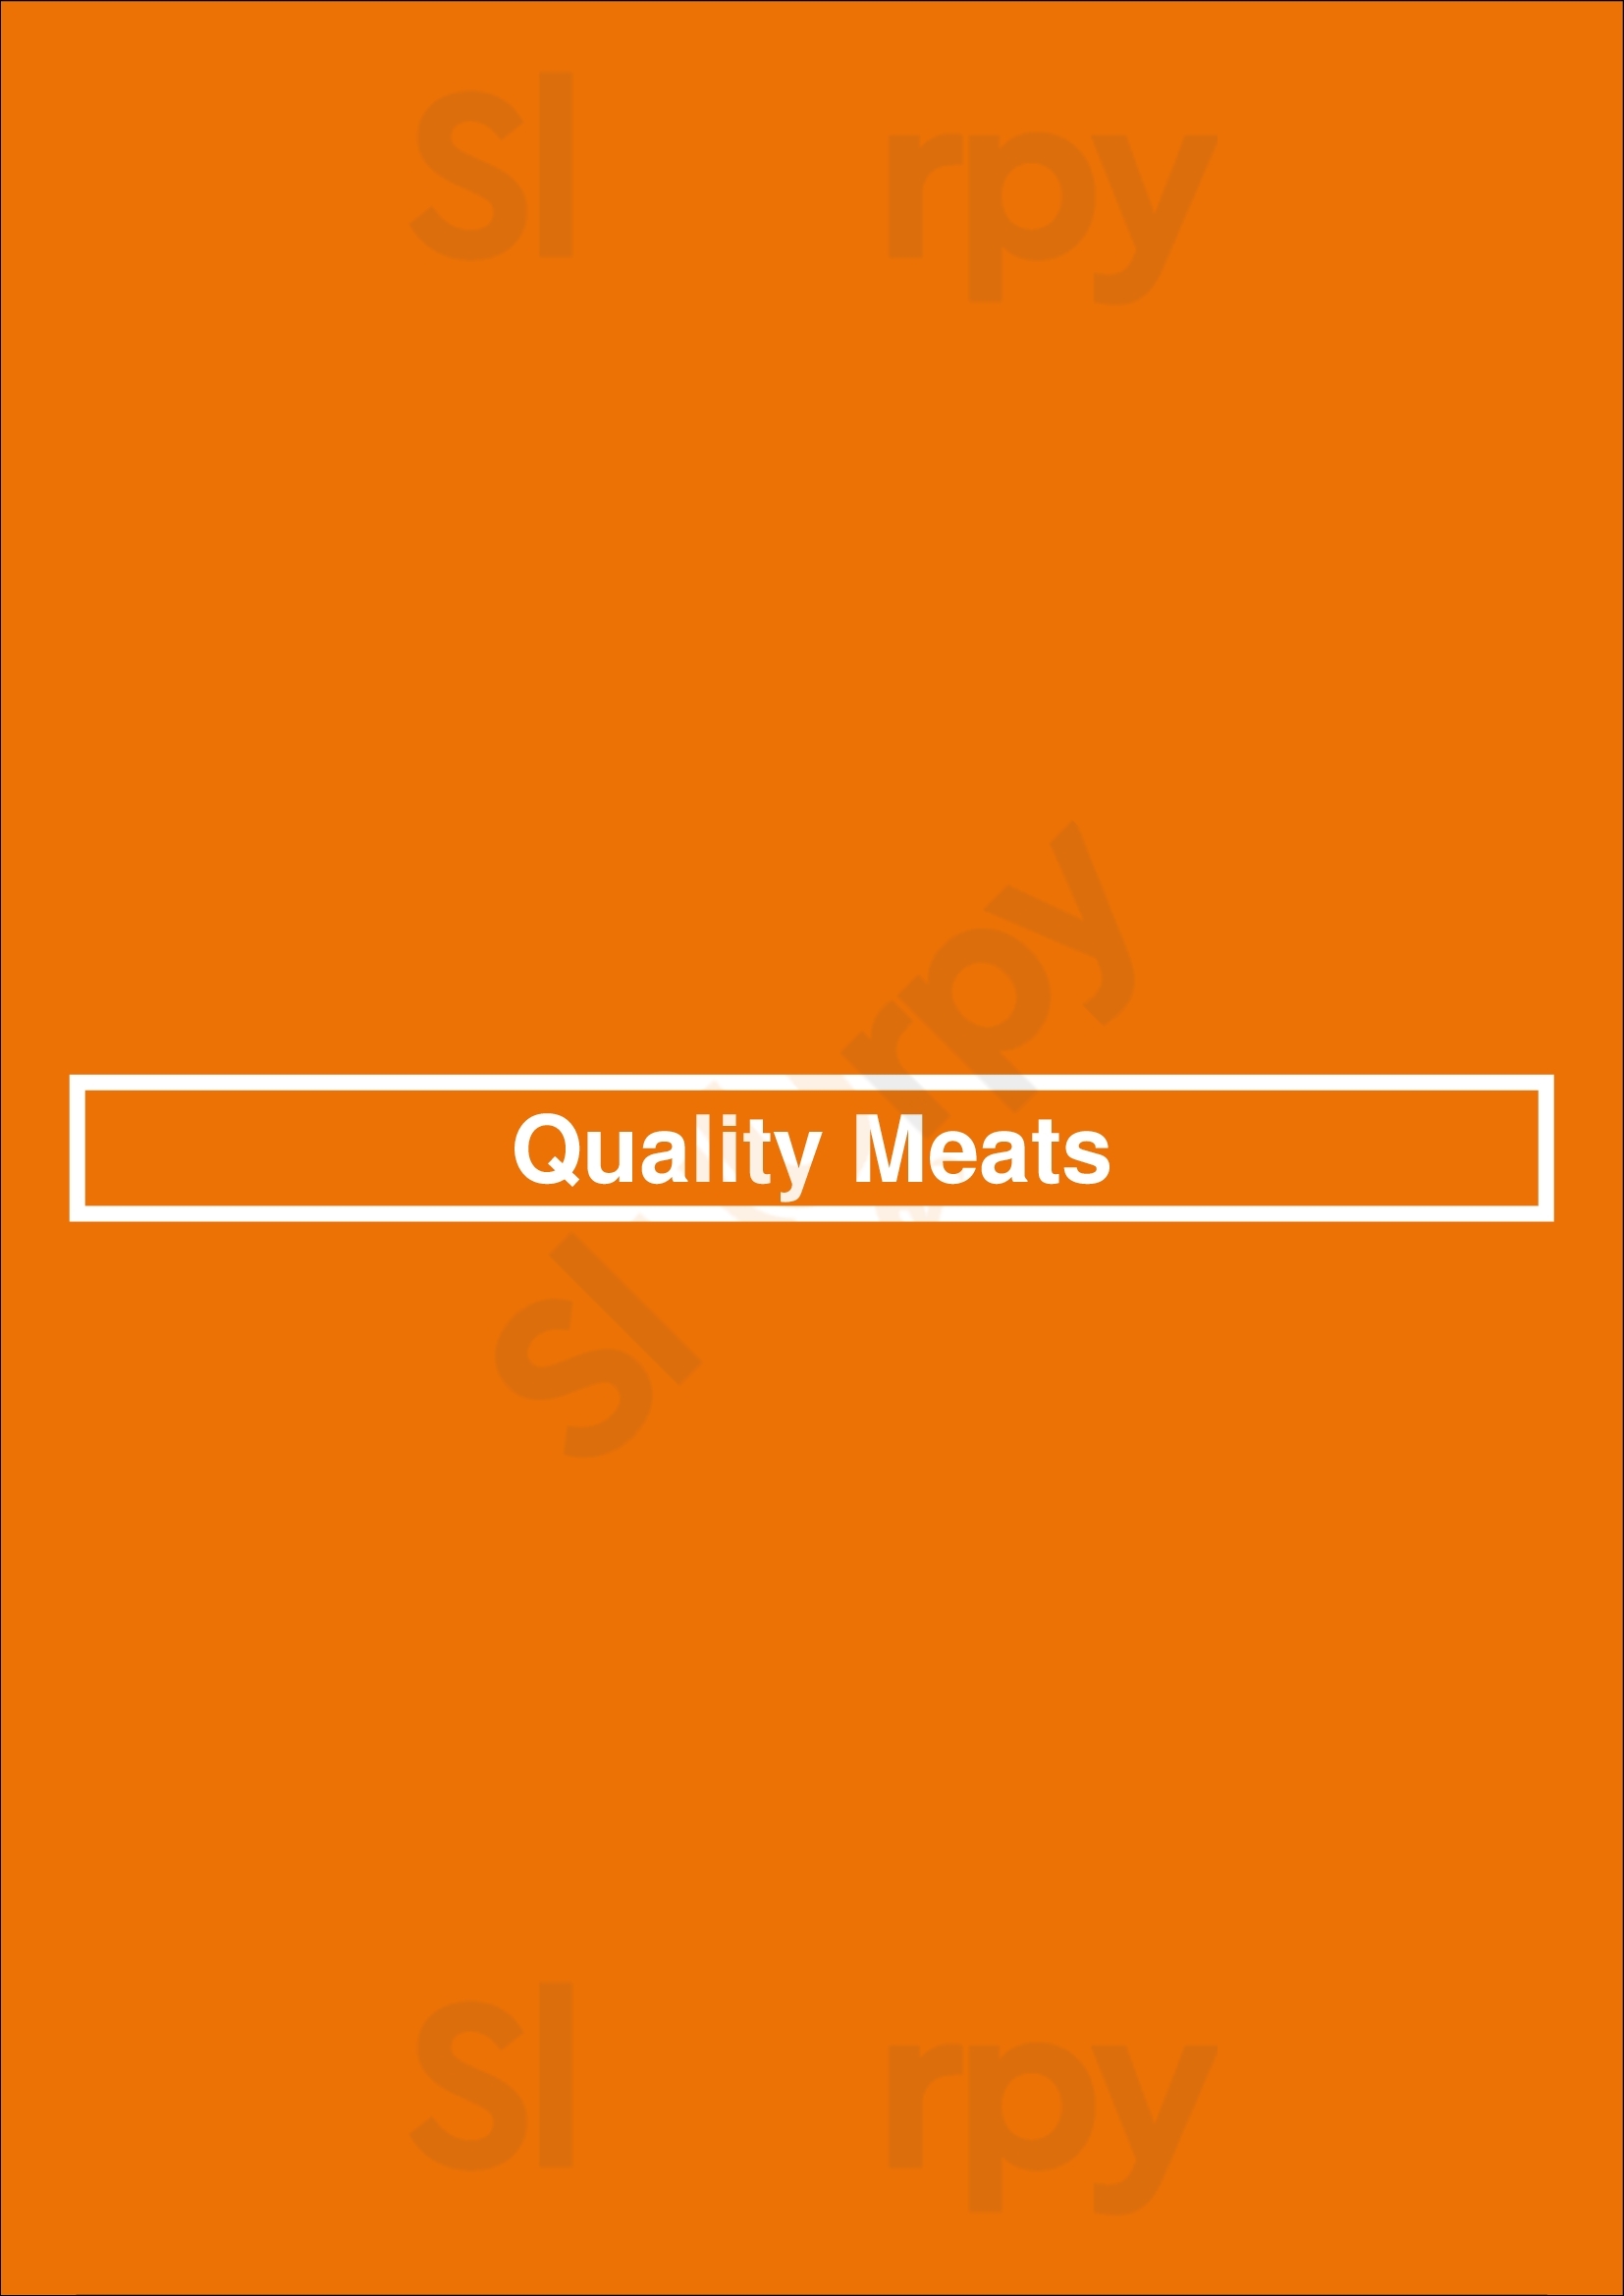 Quality Meats Miami Beach Menu - 1